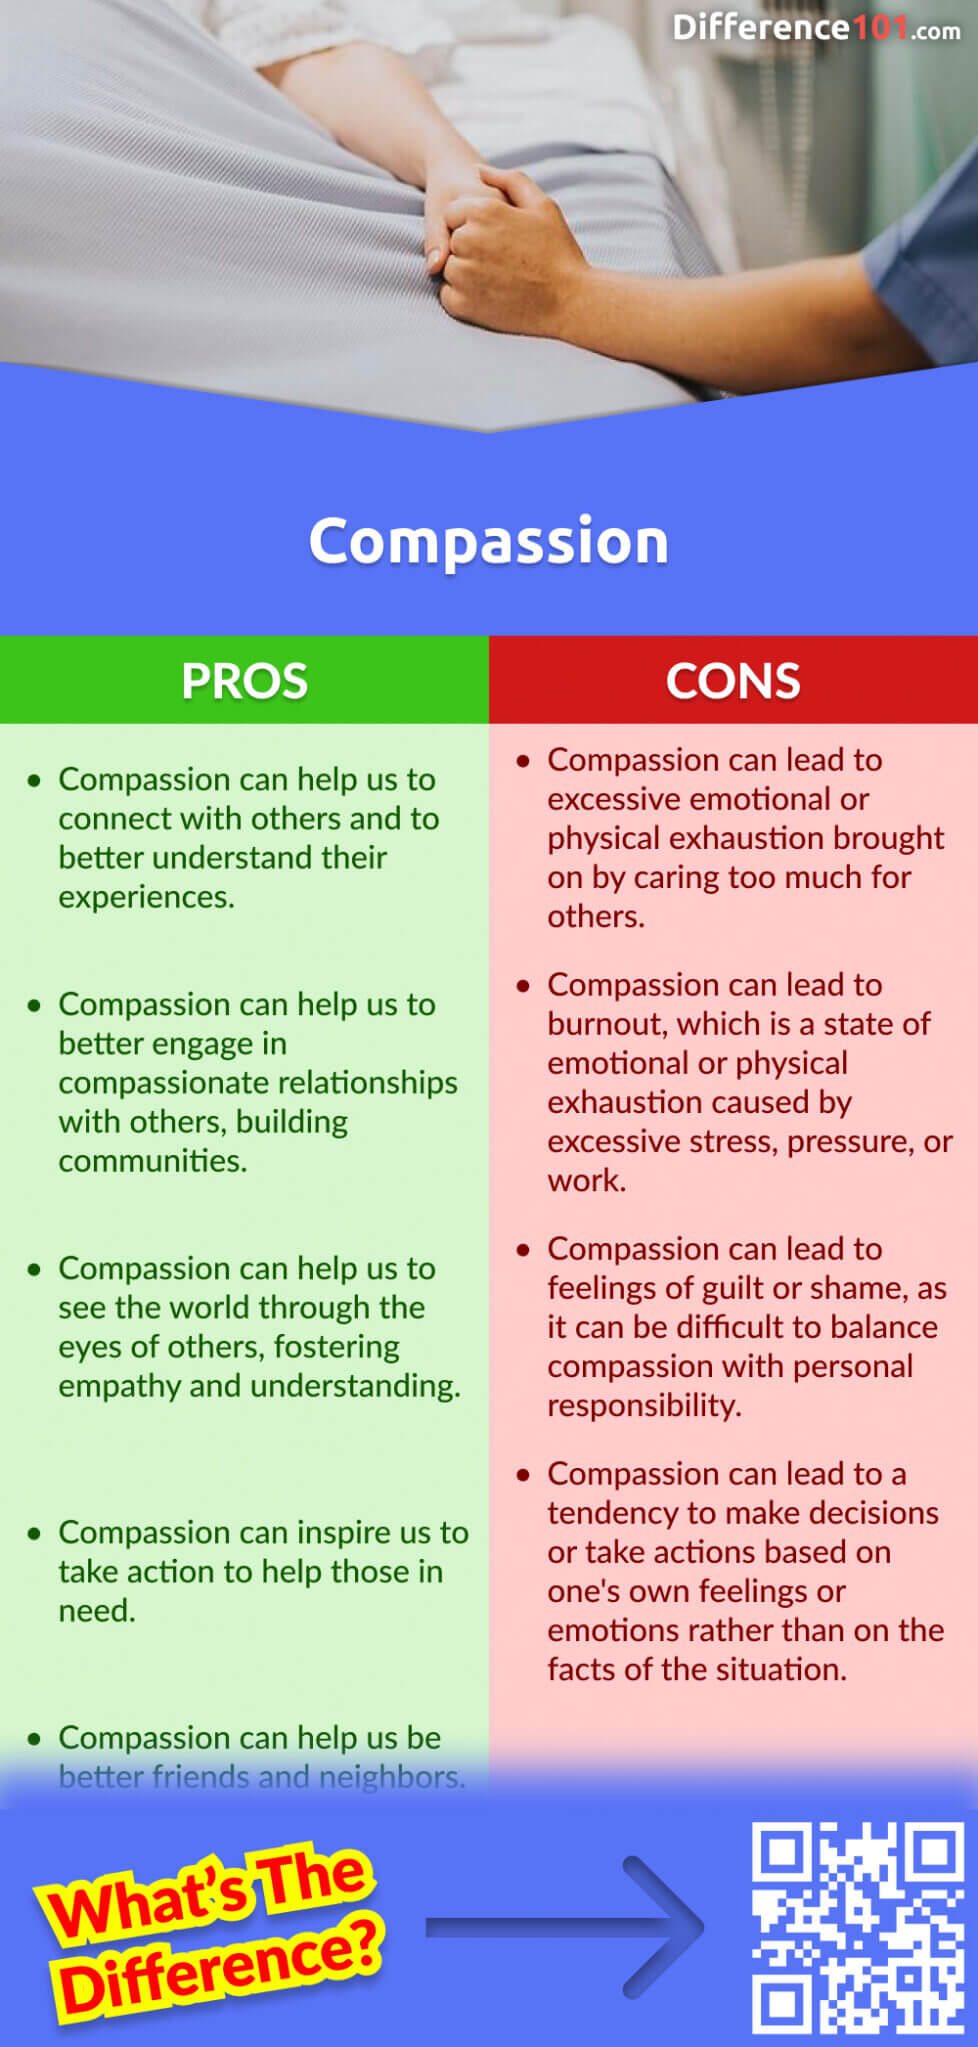 Compassion Pros & Cons